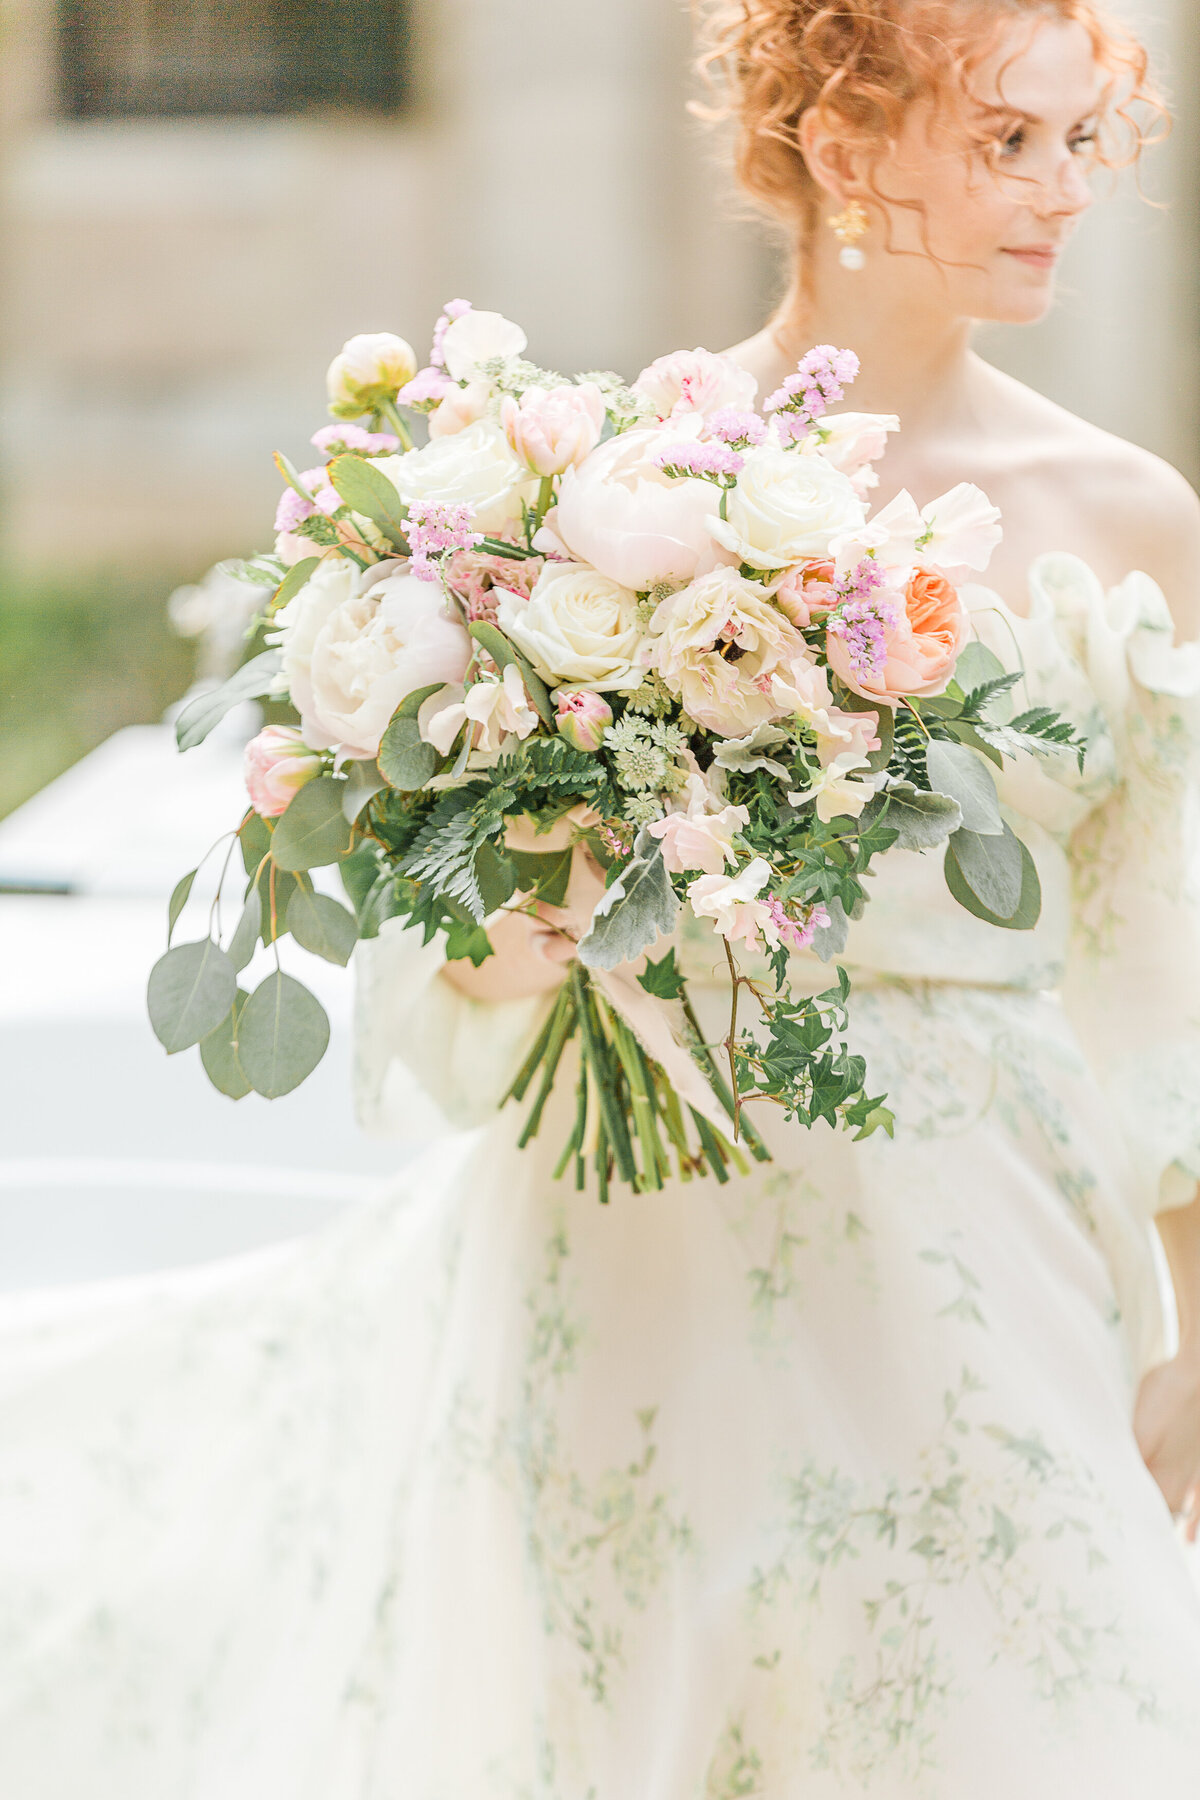 Detail image of bridal bouquet. Captured by best Massachusetts wedding photographer Lia Rose Weddings